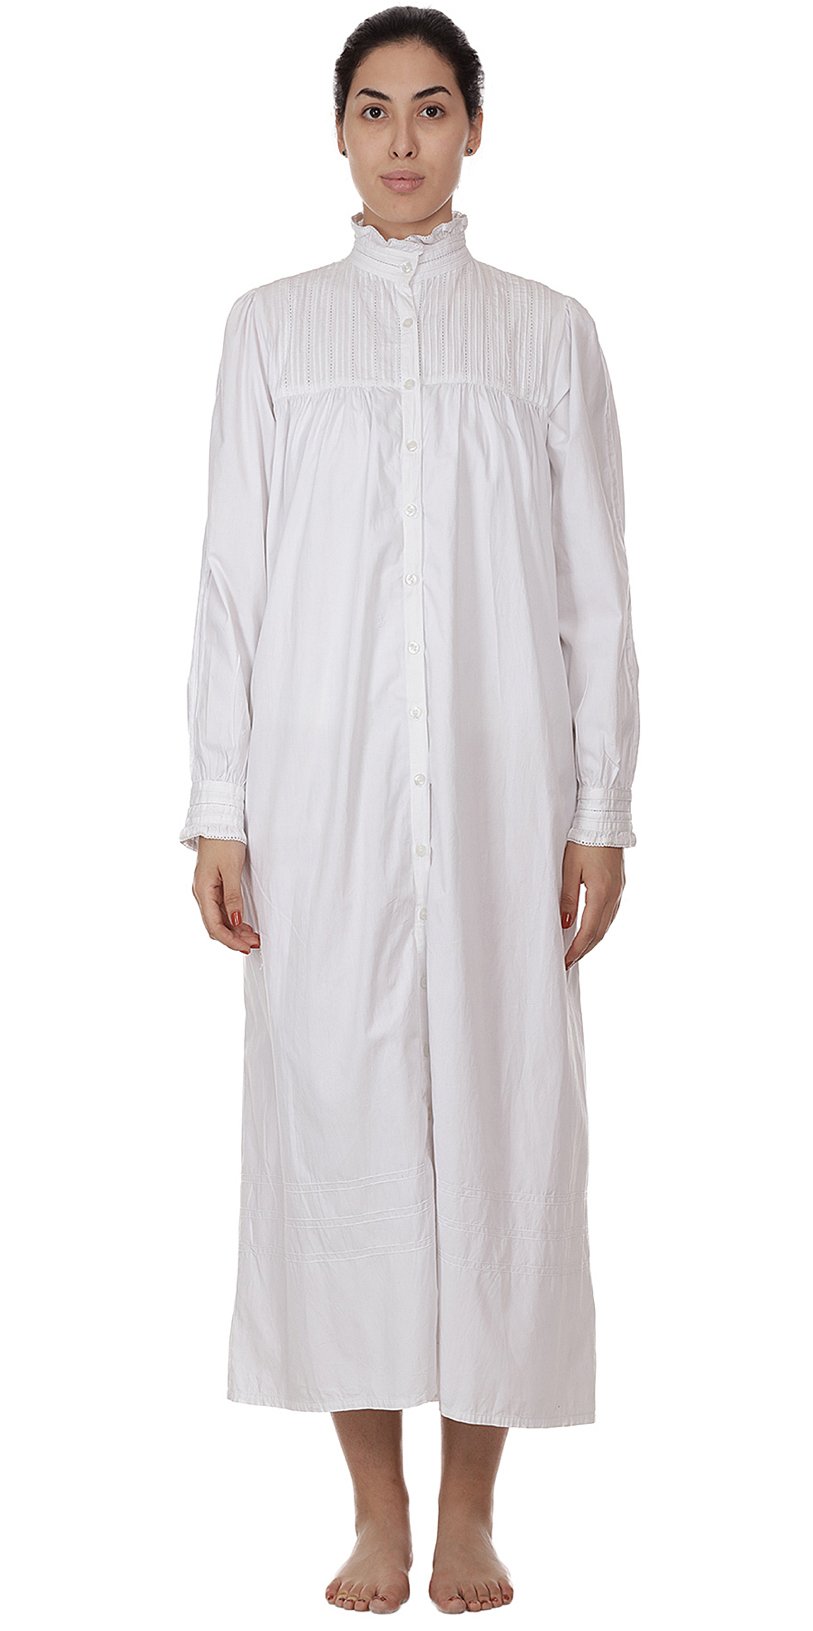 white cotton nightdress long sleeve